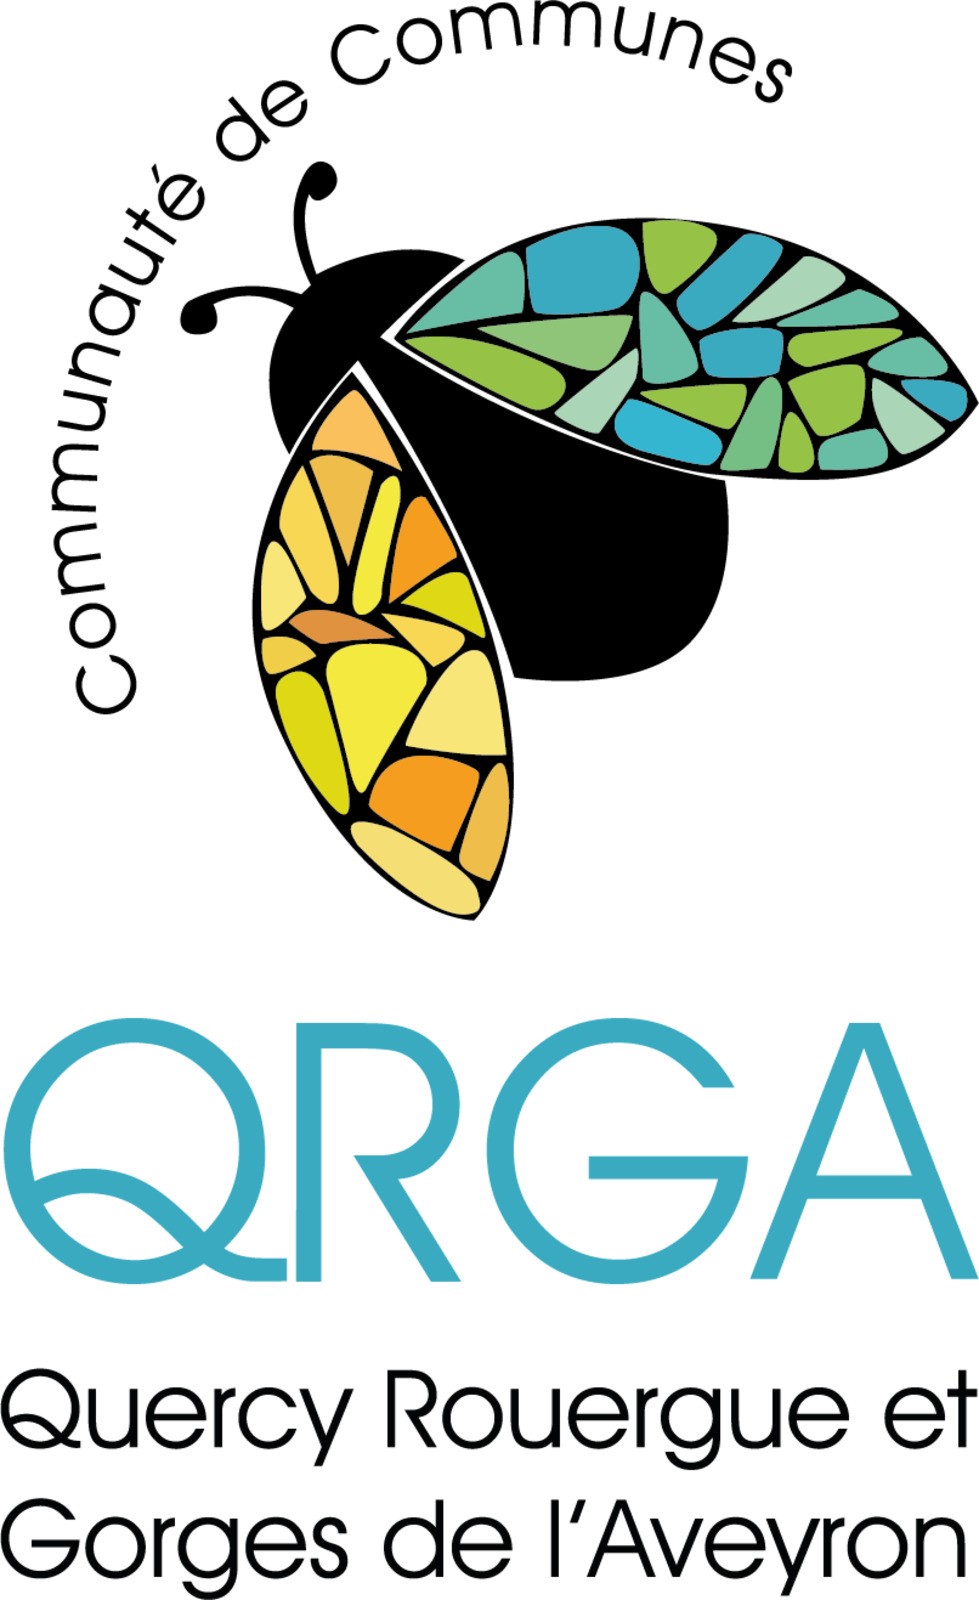 Communauté de Communes QRGA